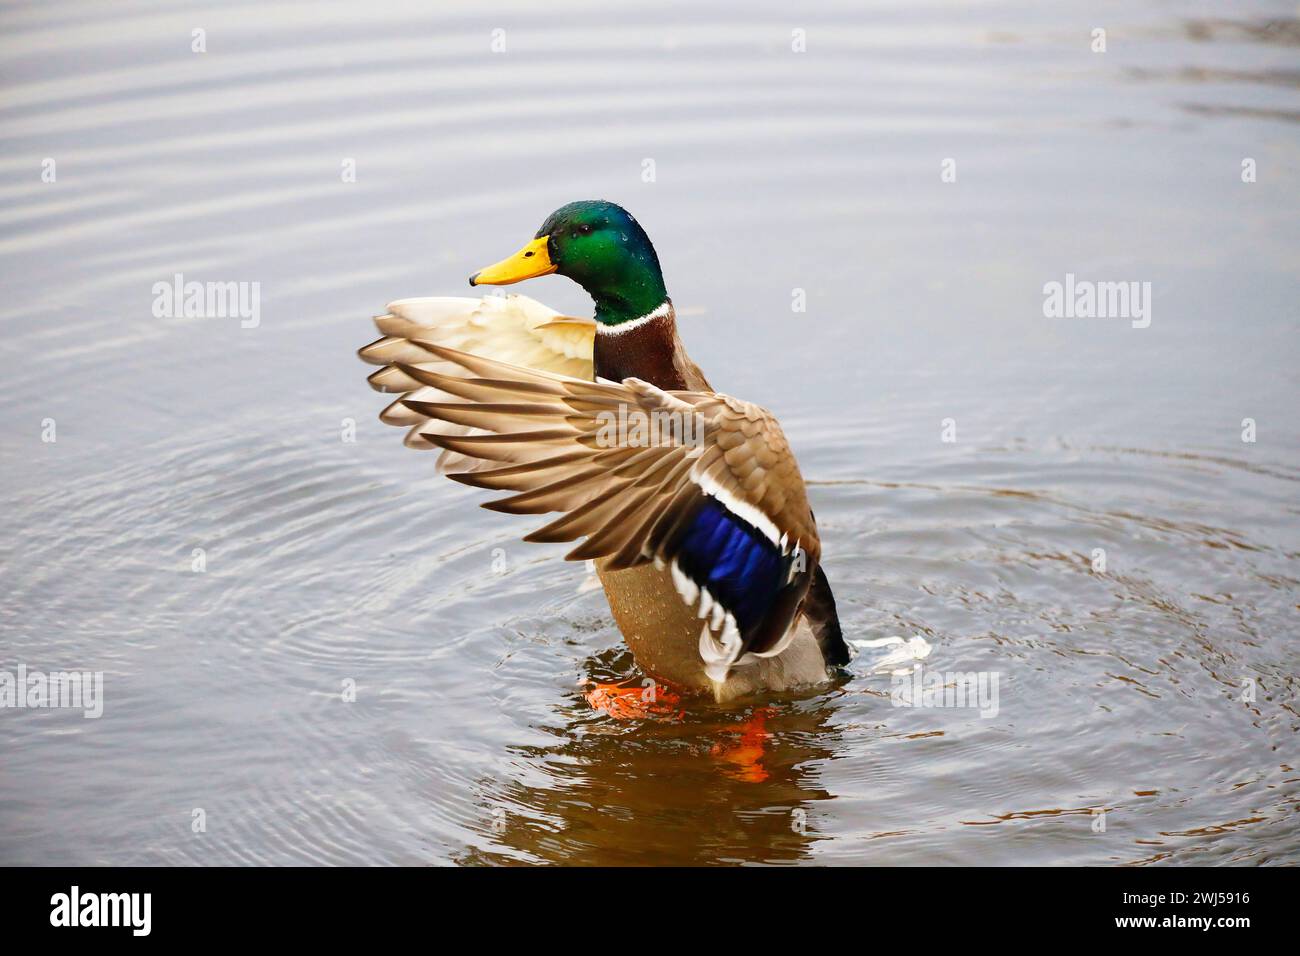 Un canard colvert sur un lac, Ziegeleipark, Heilbronn, Allemagne, Europe Banque D'Images